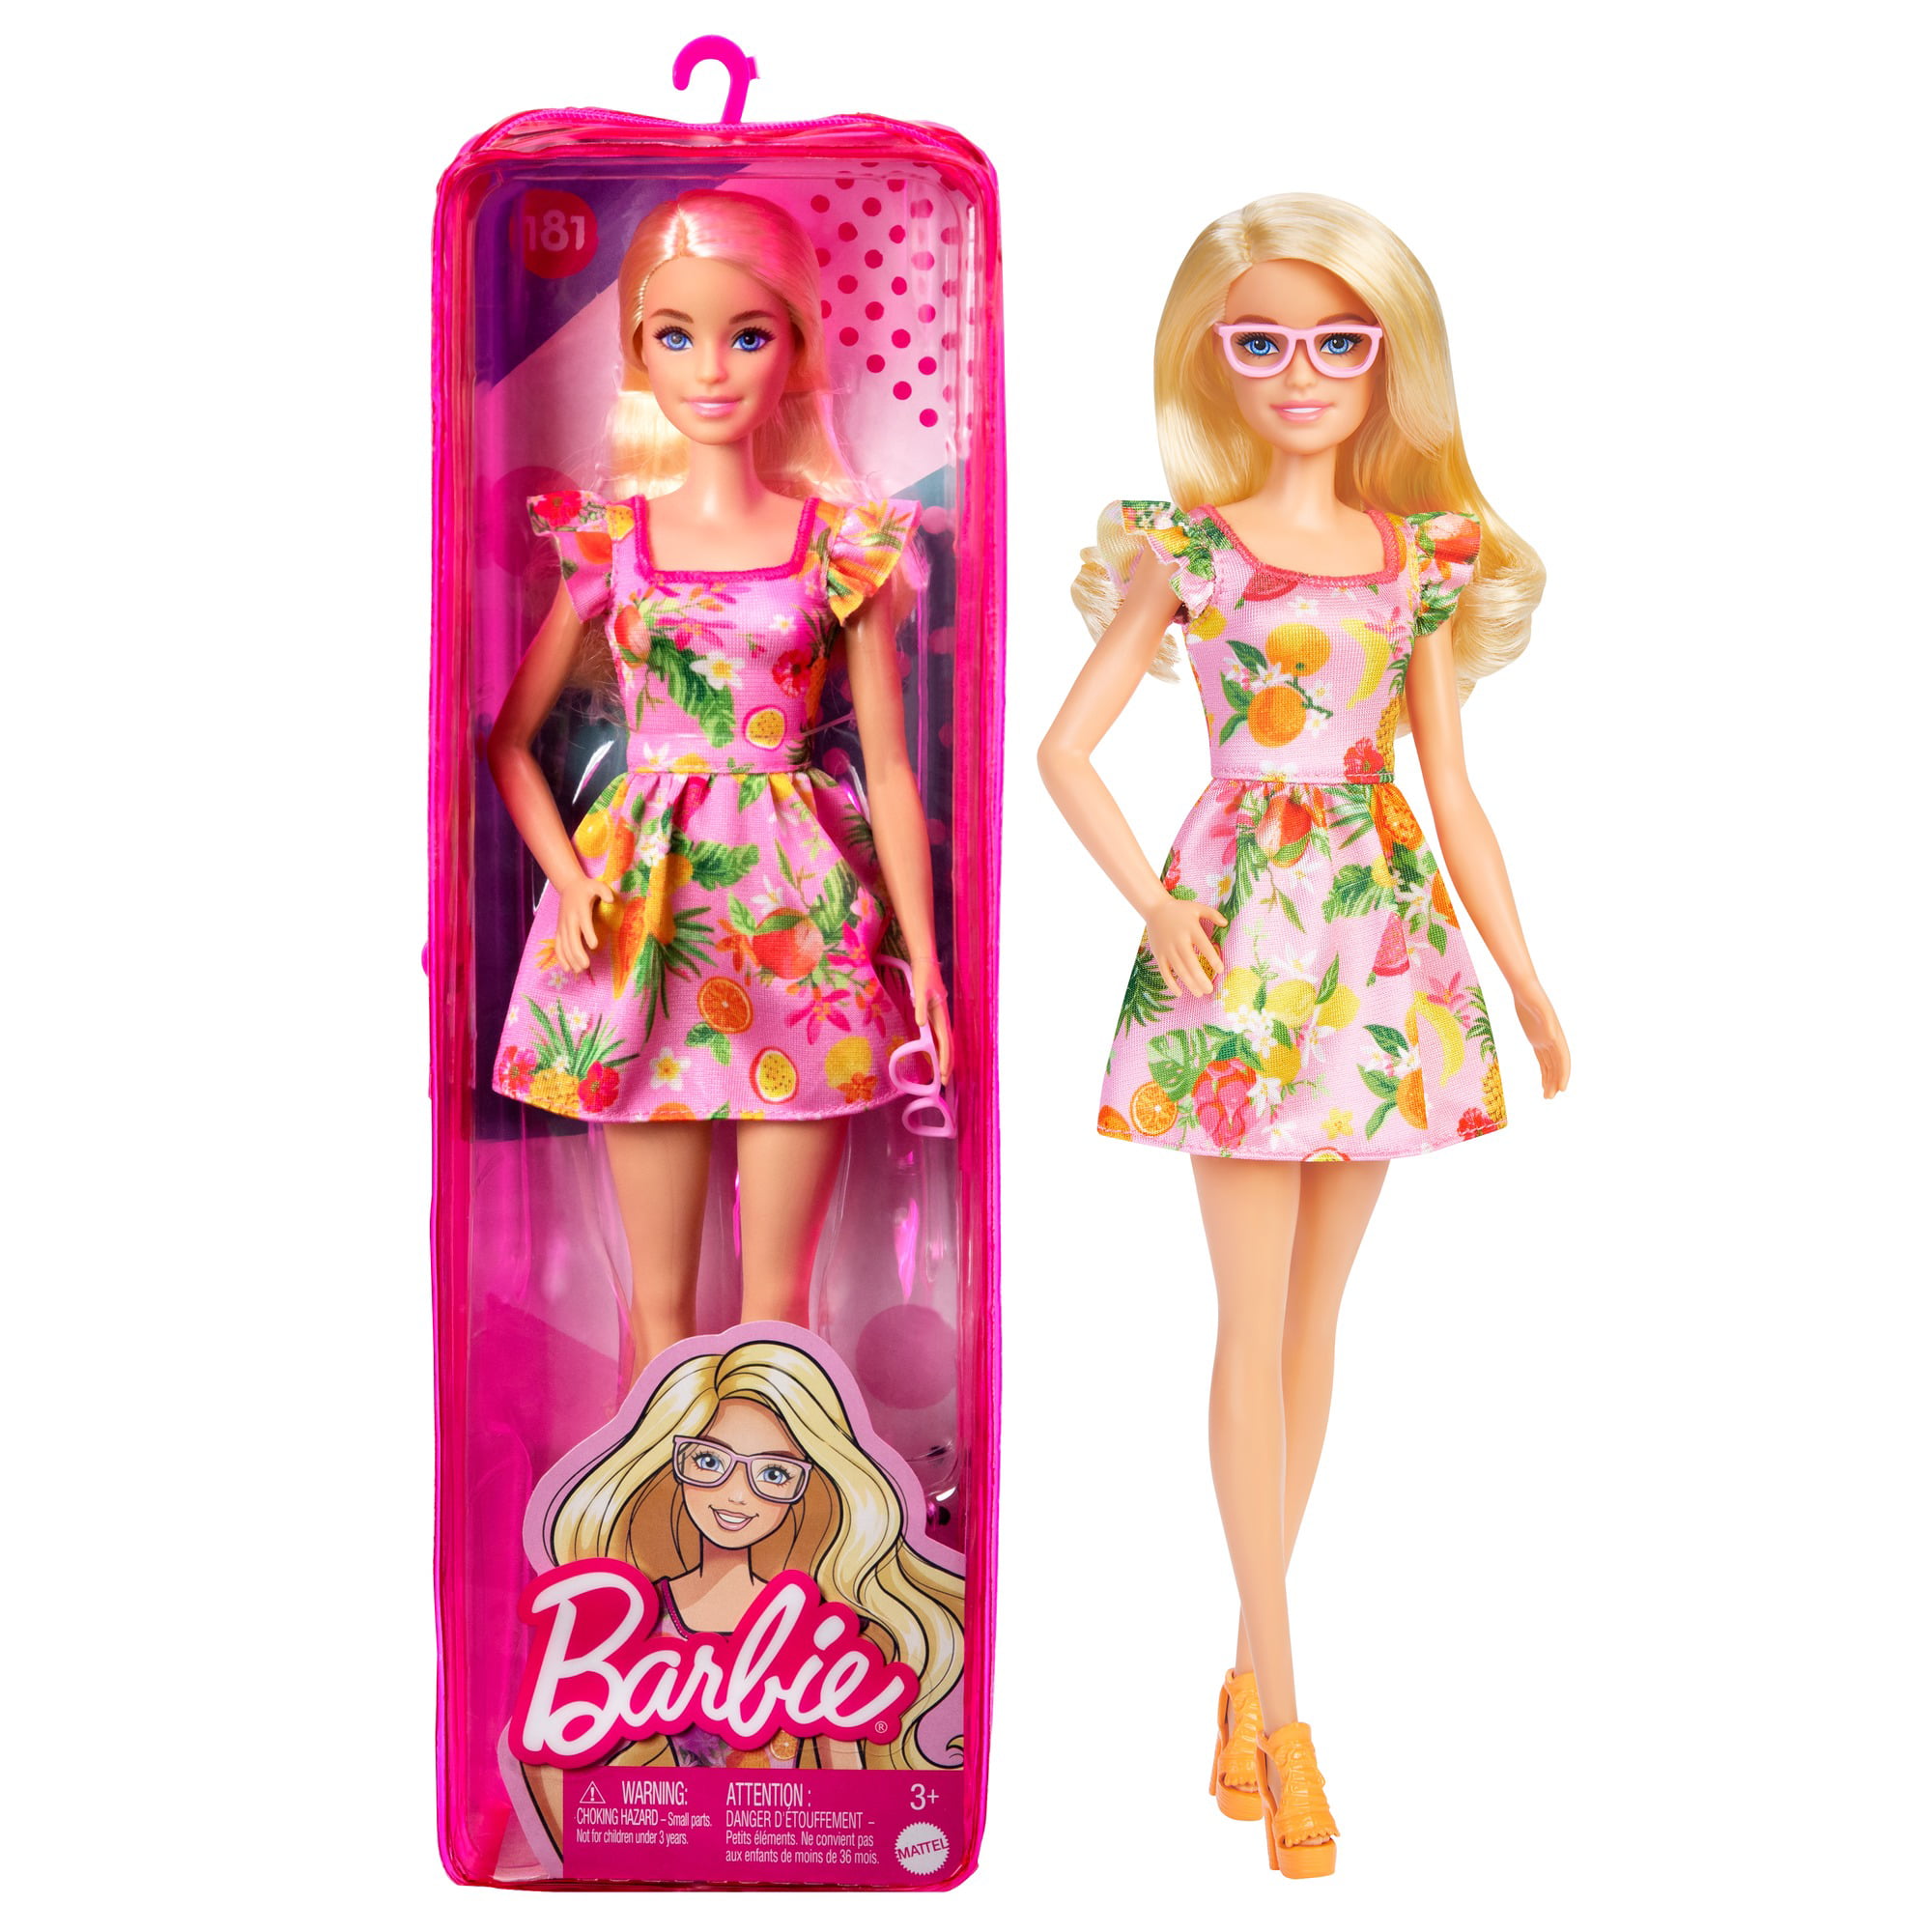 Barbie Fashionista Zip Storage Bags Doll 3 New Transparent Pink Original Mattel 